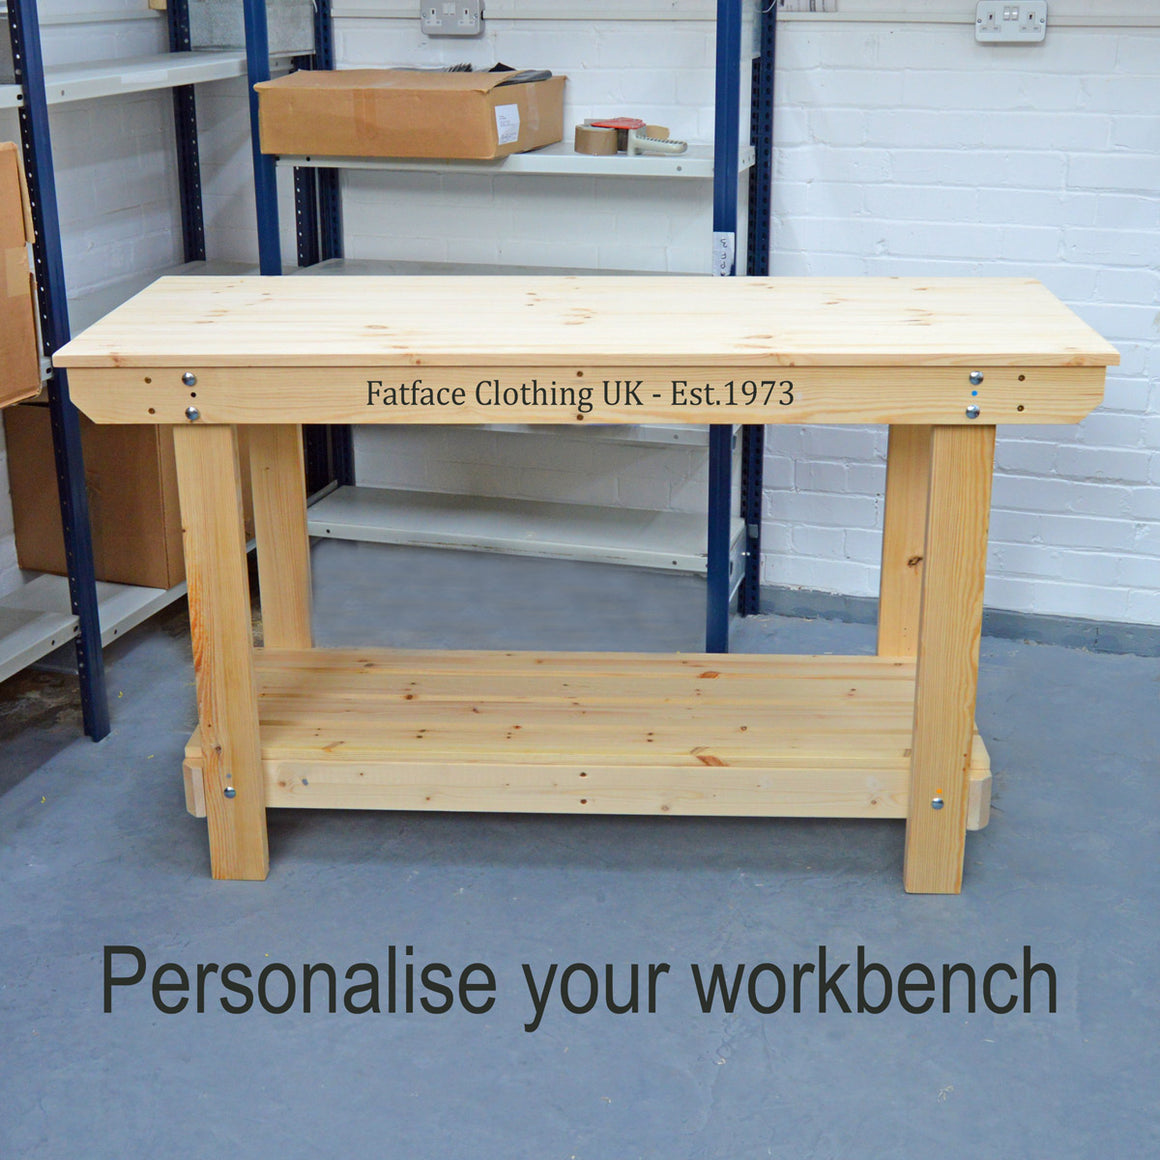 business branding on workbench